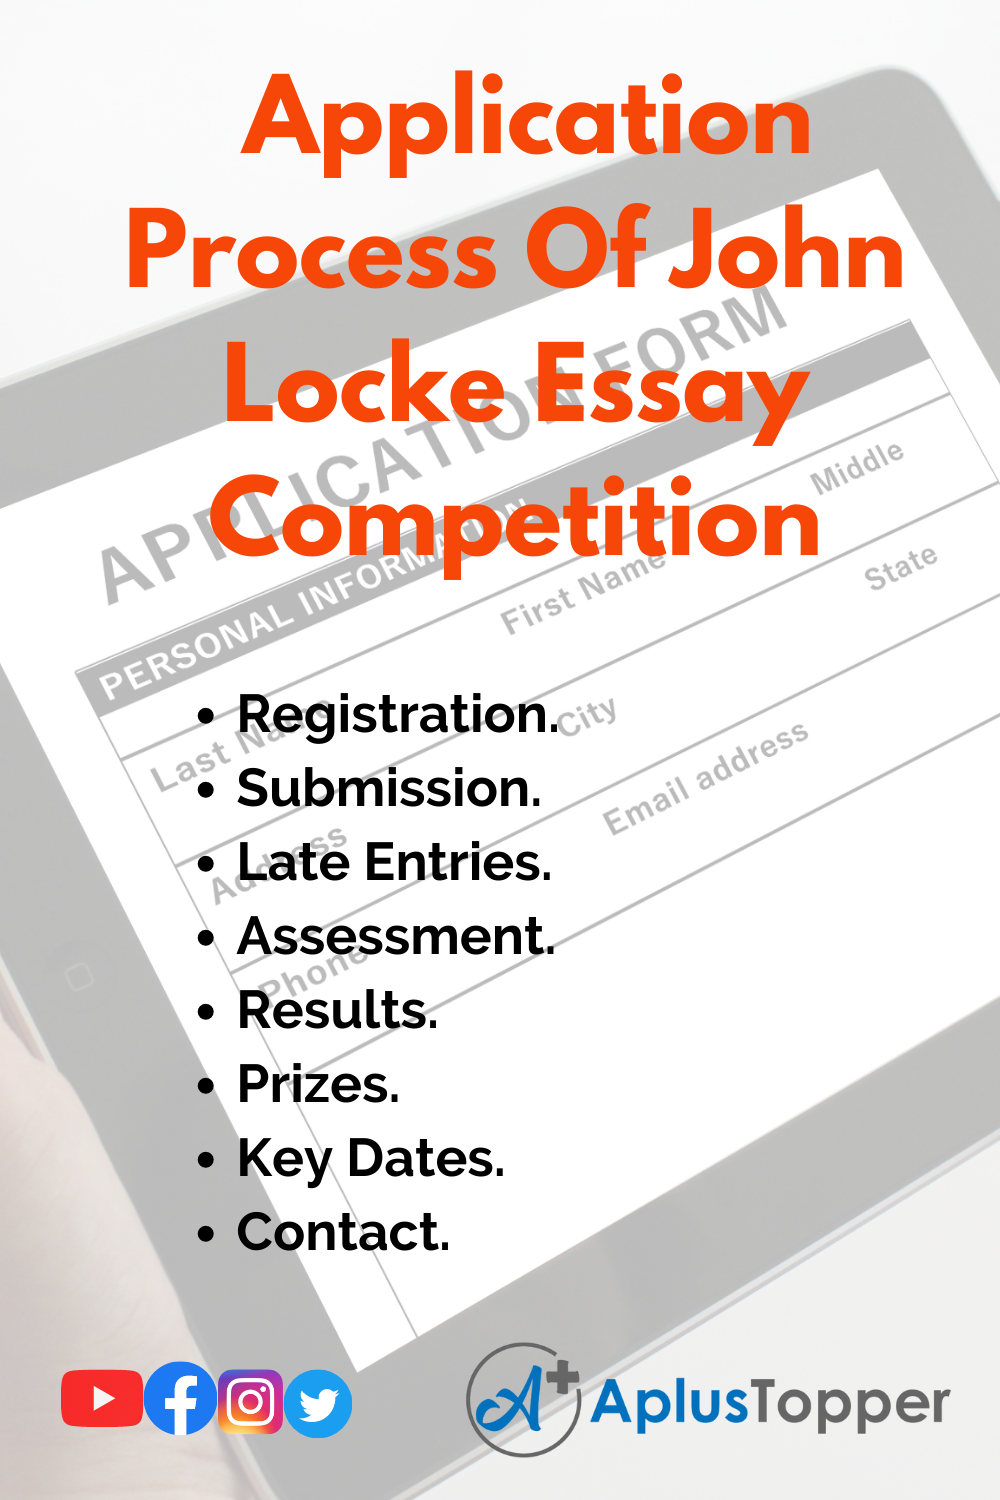 is john locke essay competition free